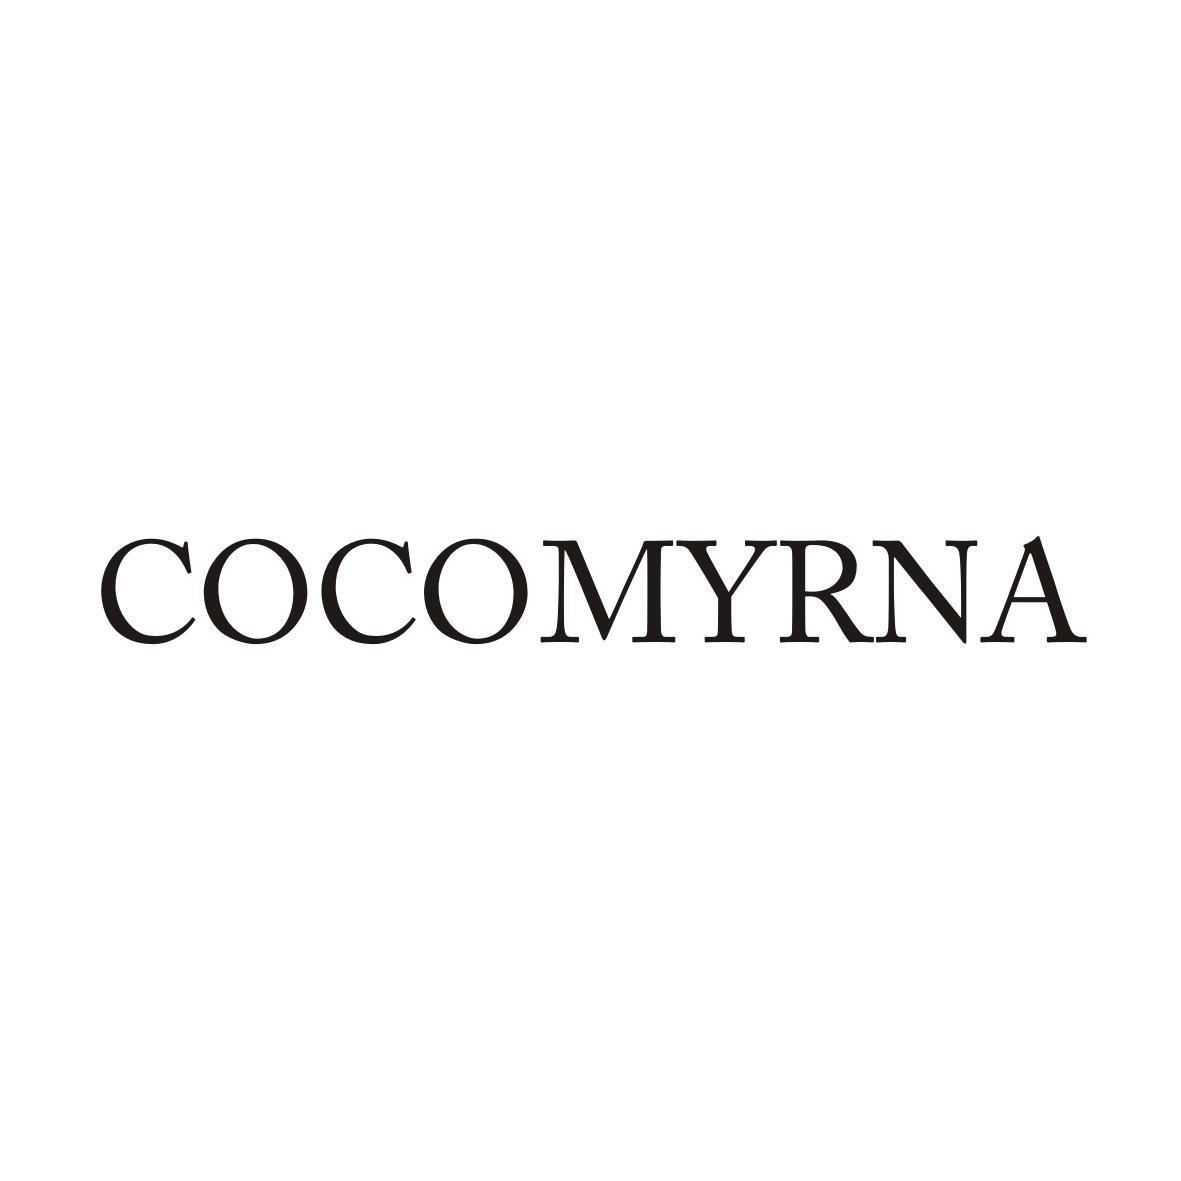 COCOMYRNA